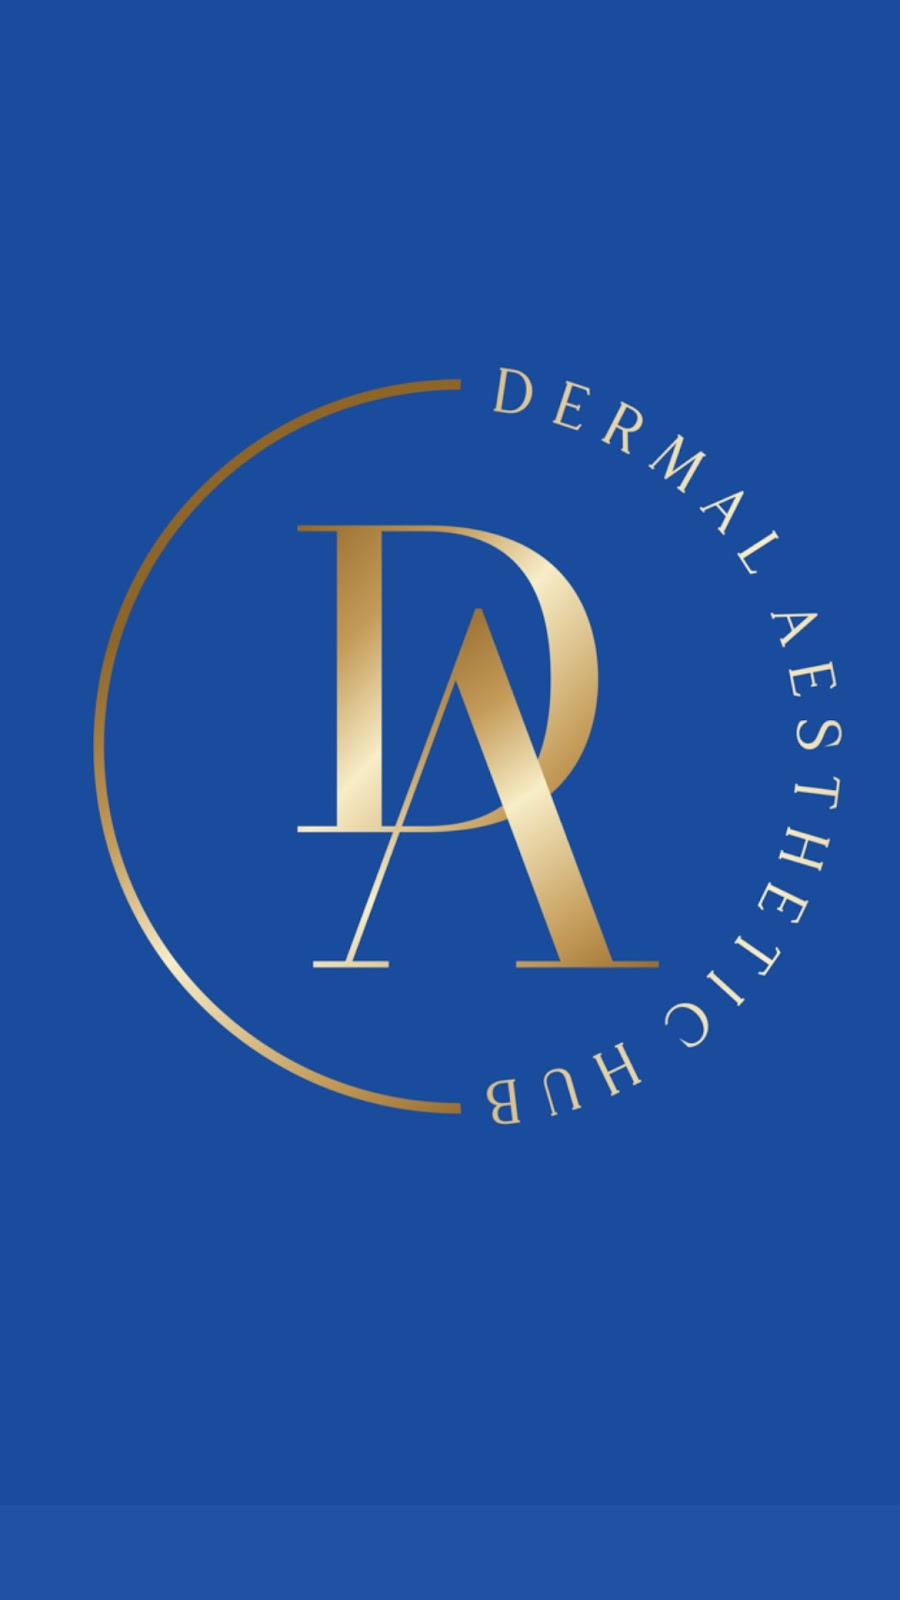 Dermal Aesthetic Hub | beauty salon | 15 Lores St, Middleton Grange NSW 2171, Australia | 0432100929 OR +61 432 100 929